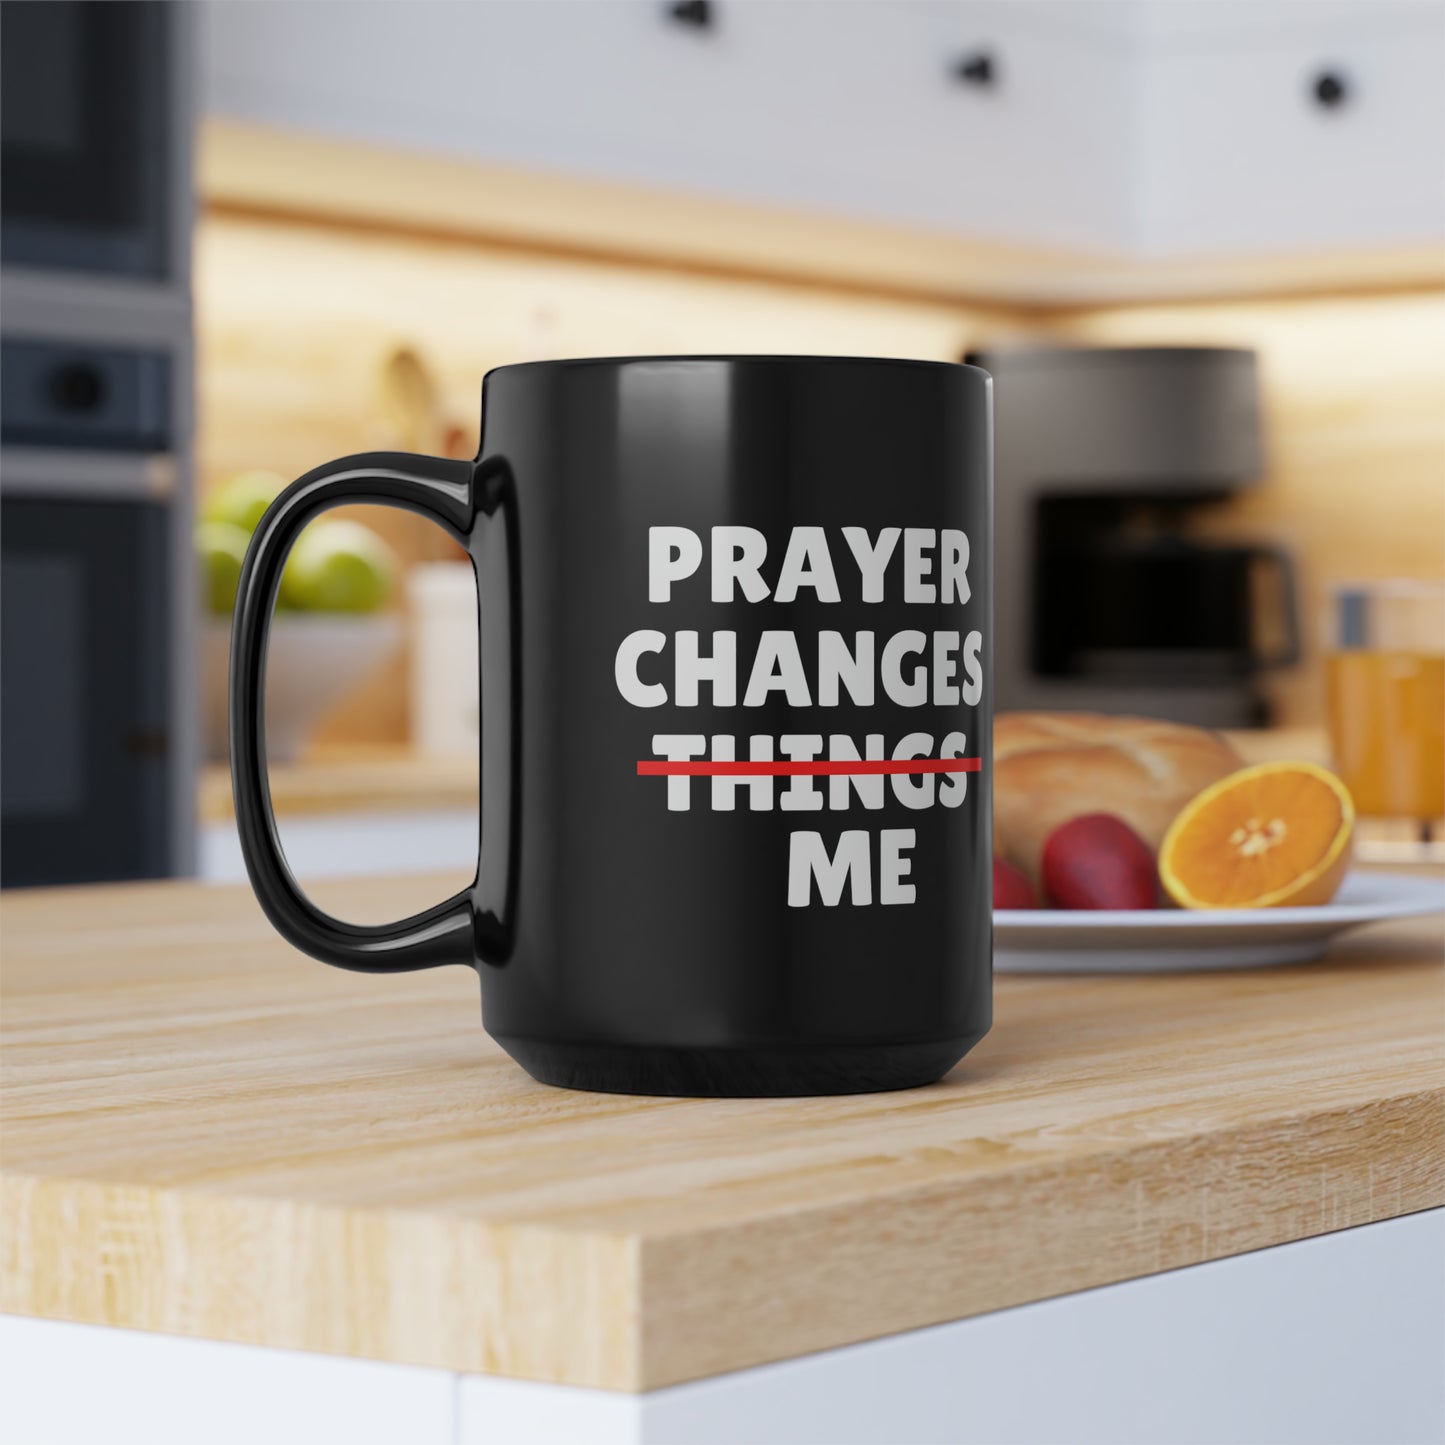 PRAYER CHANGES ME BLACK MUG 15OZ